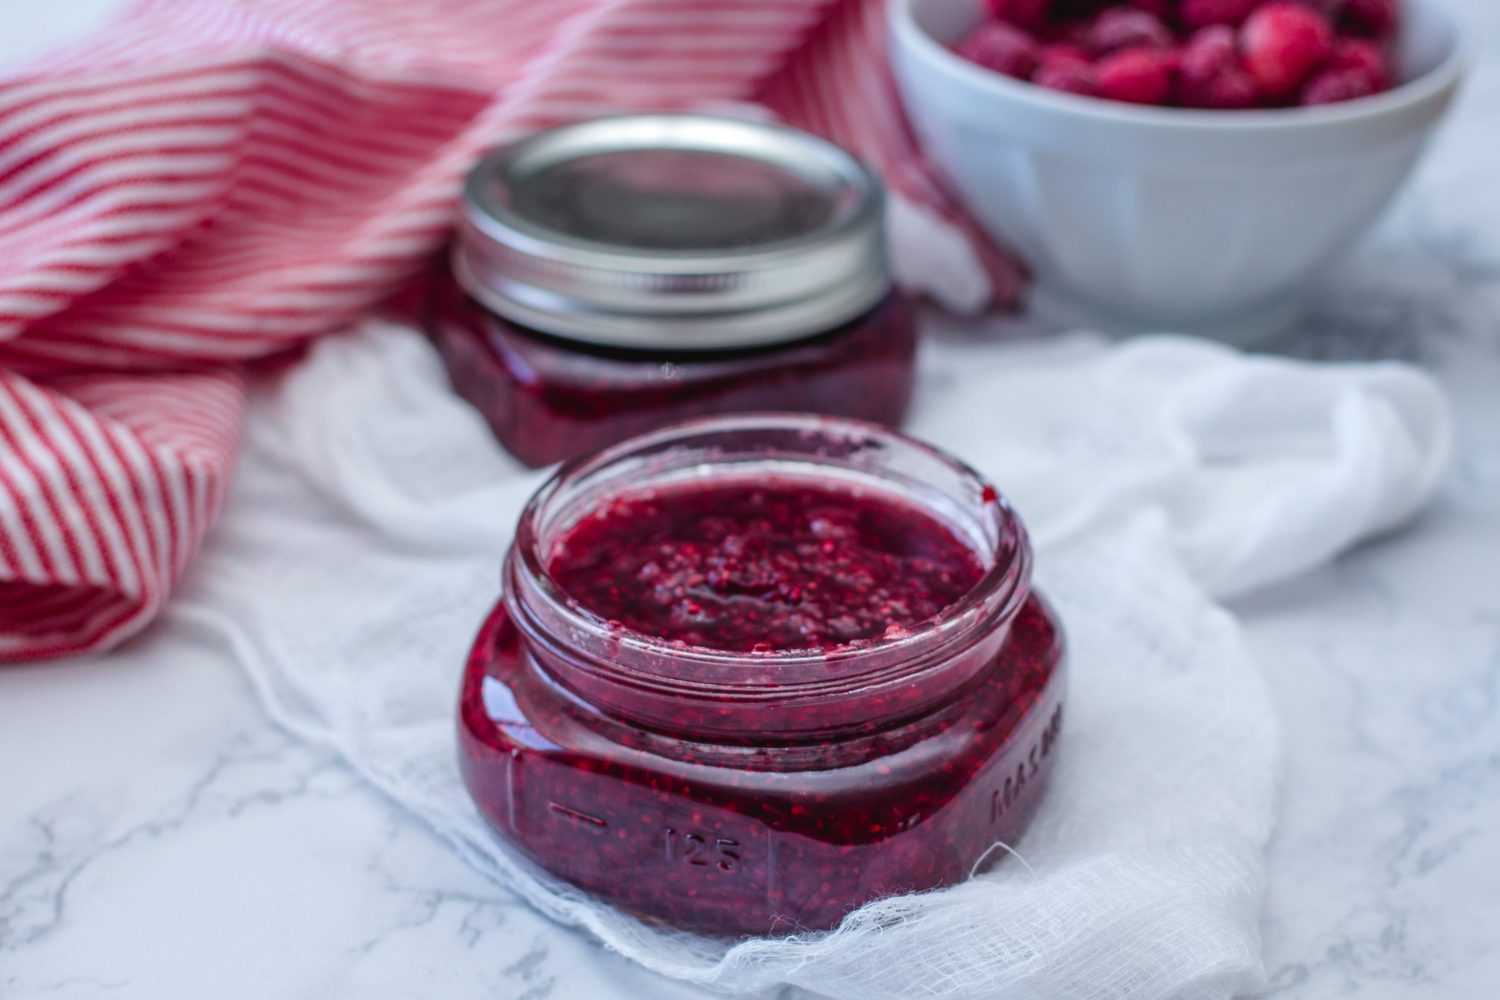 Purple raspberry jam inside an open jar and fresh raspberries on side